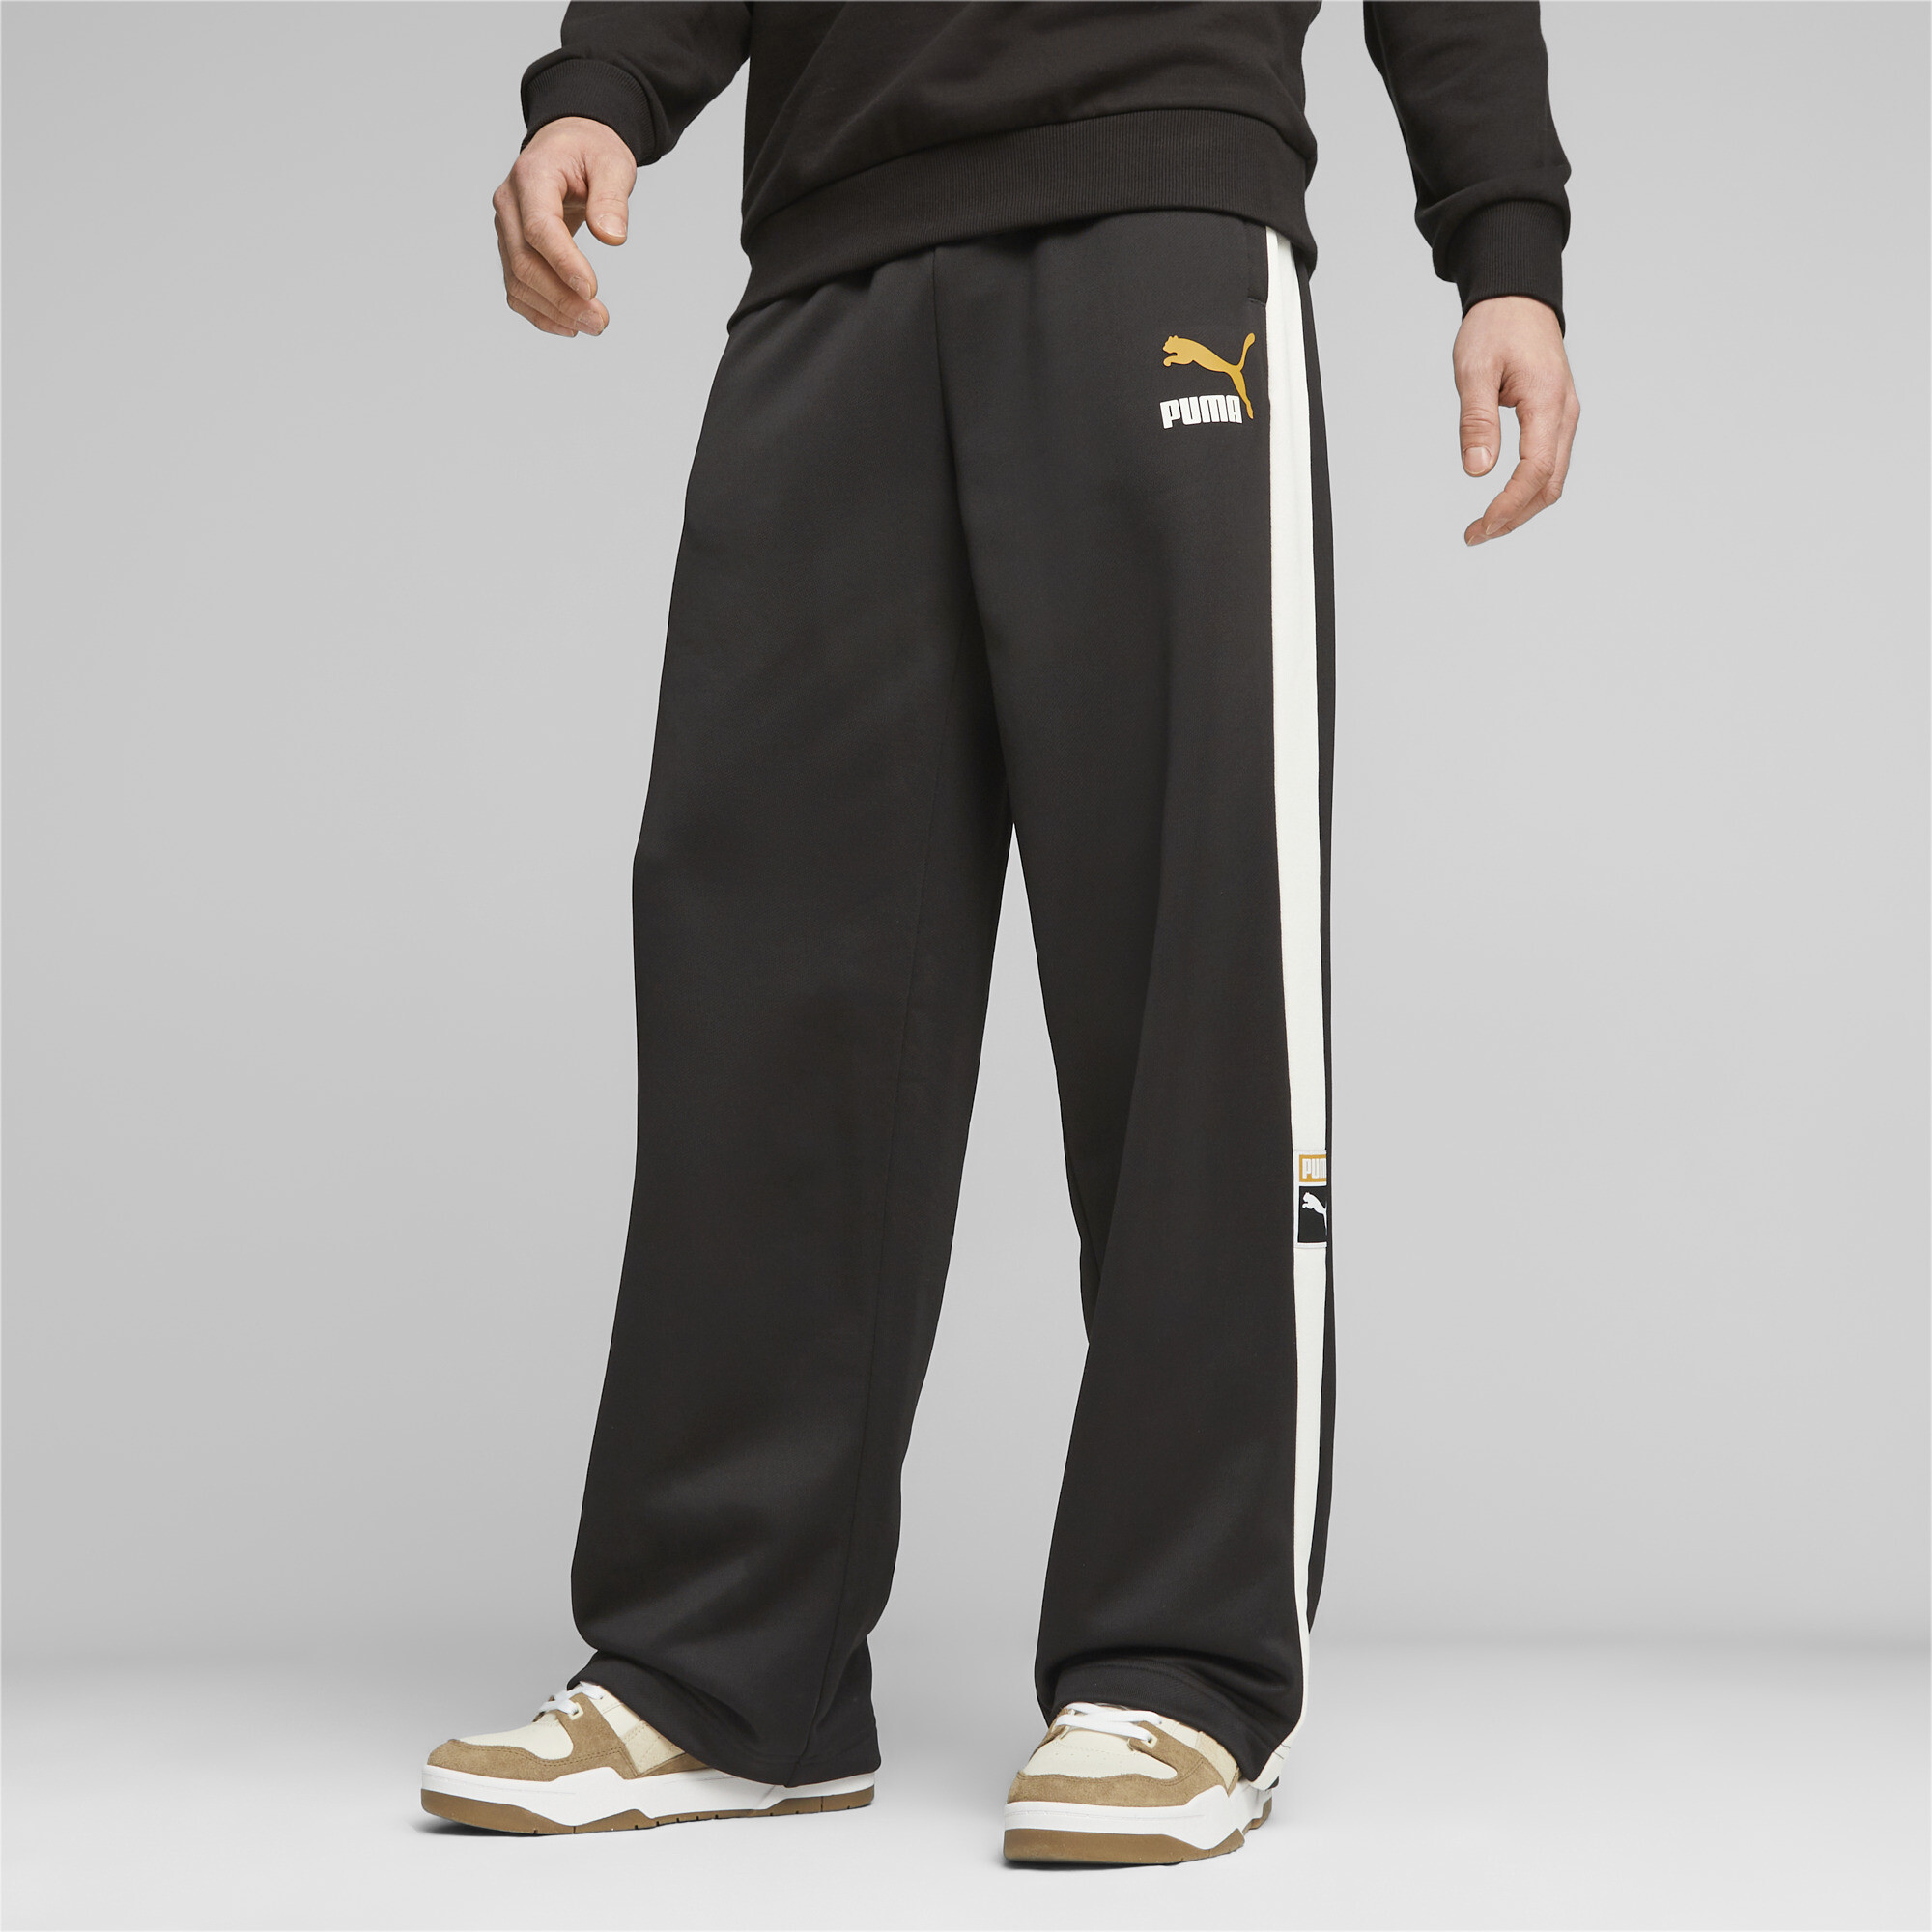 Men's Puma T7's Track Pants, Black, Size L, Clothing